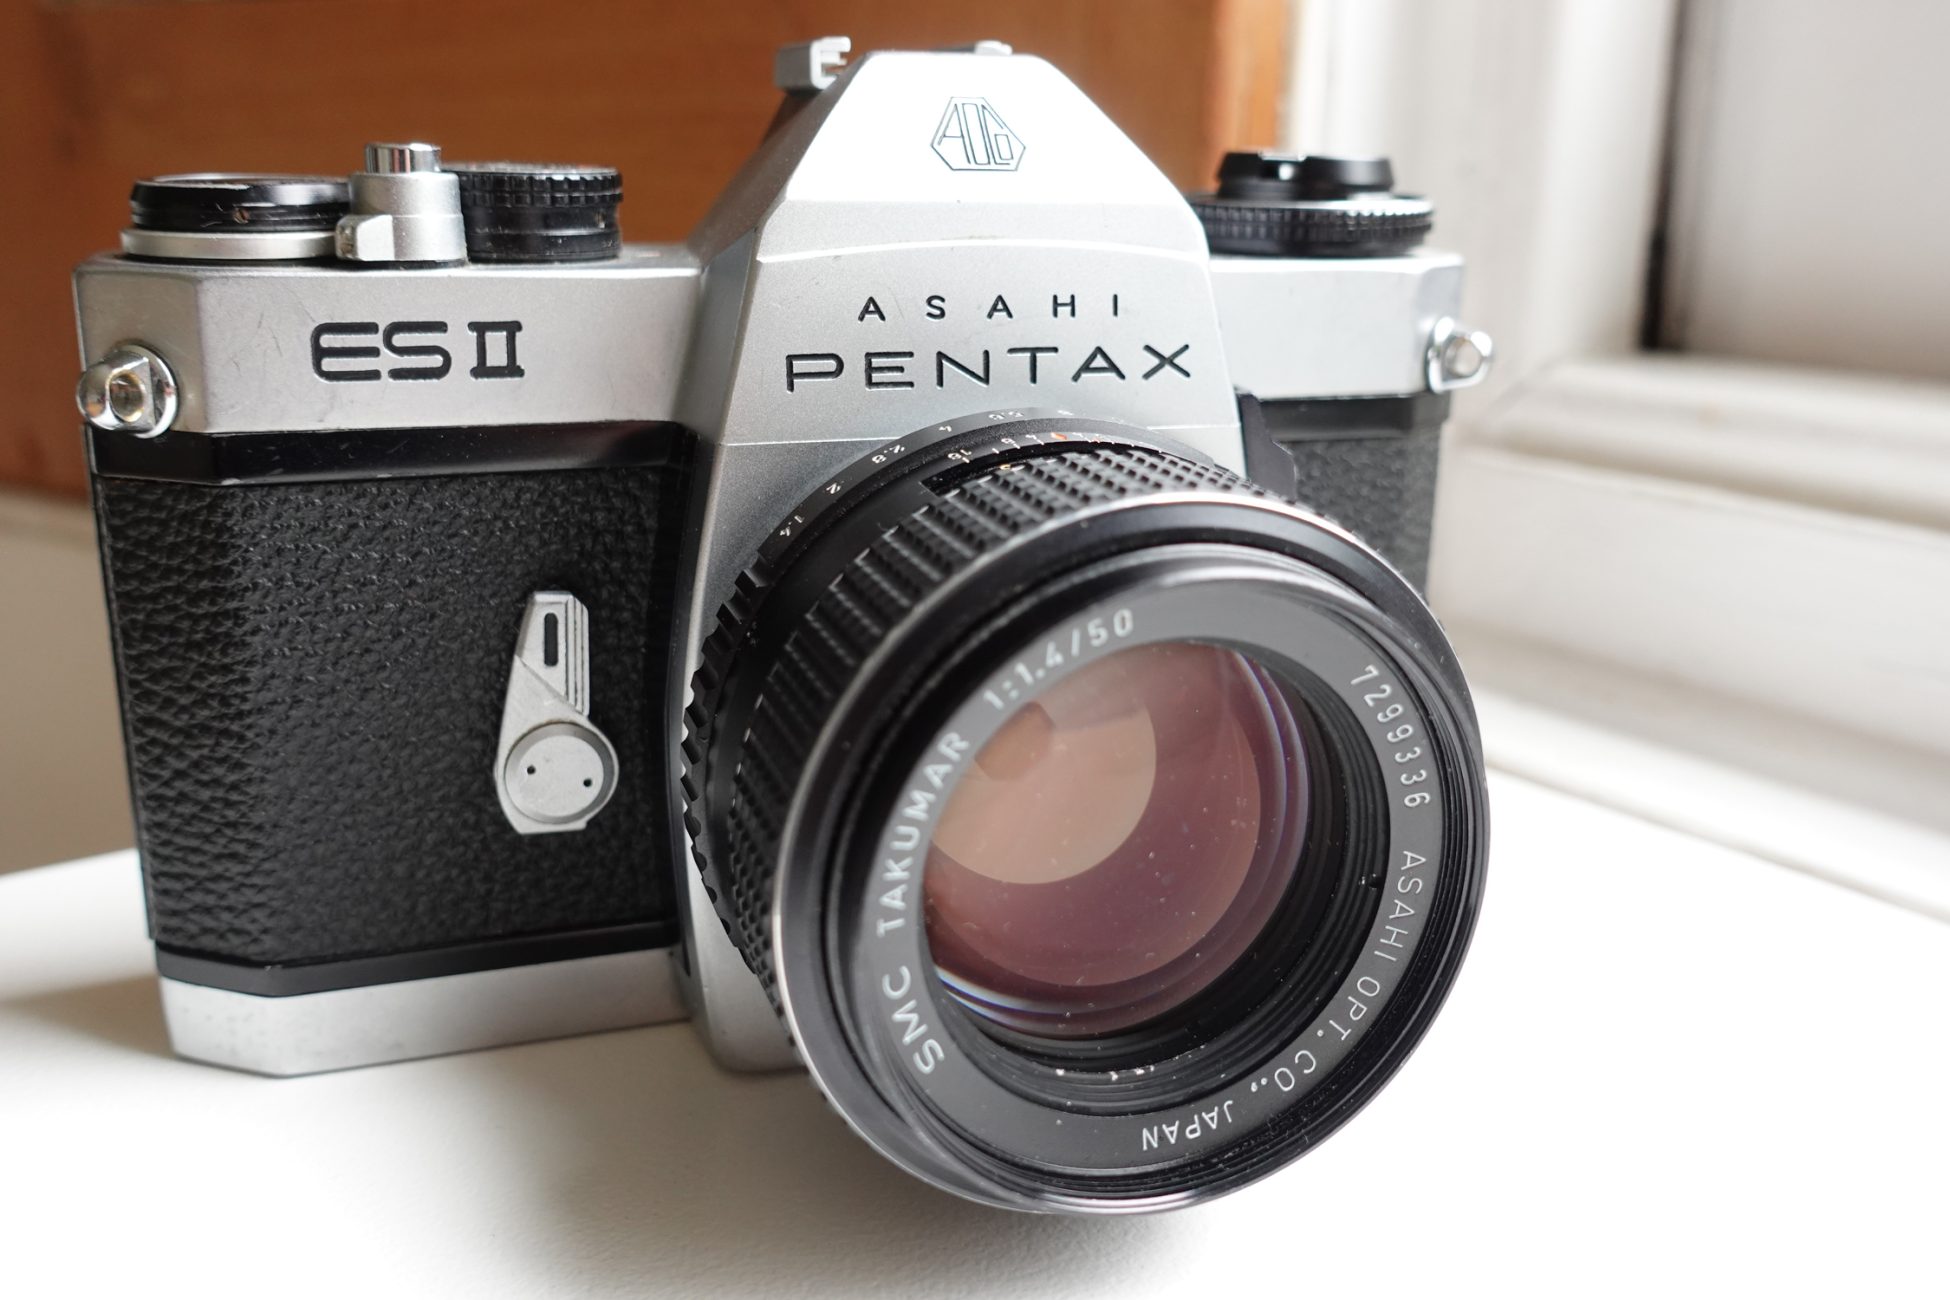 Pentax ES II camera (Pic: Stephen Dowling)